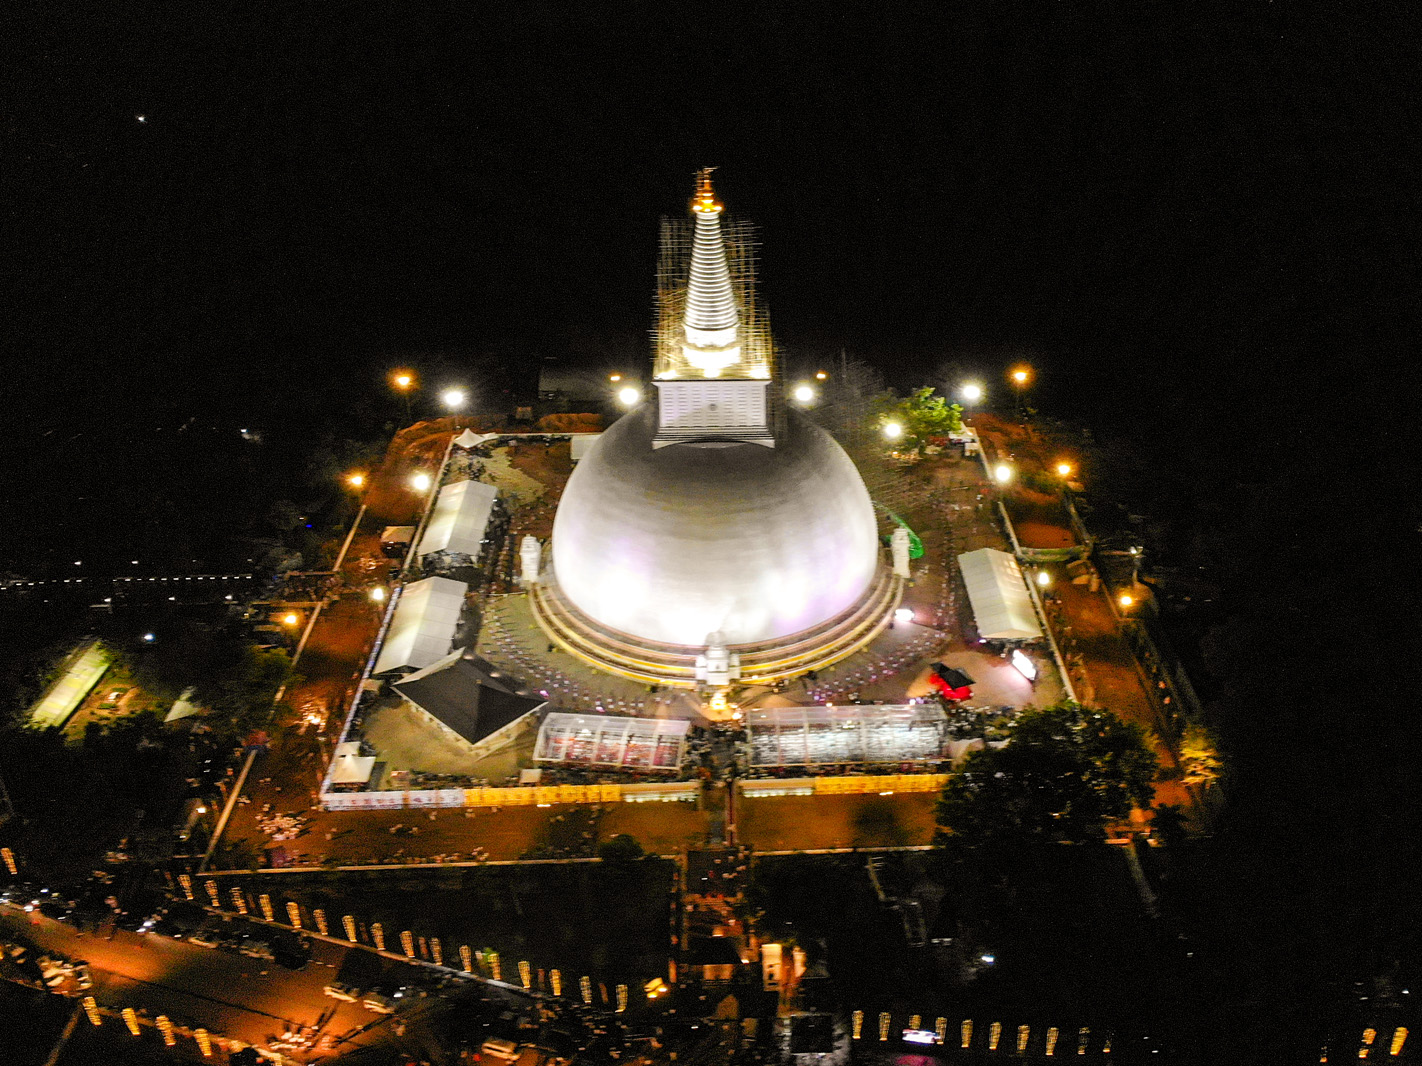 Sanda Hiru Seya Pagoda in Anuradhapura vested with the nation